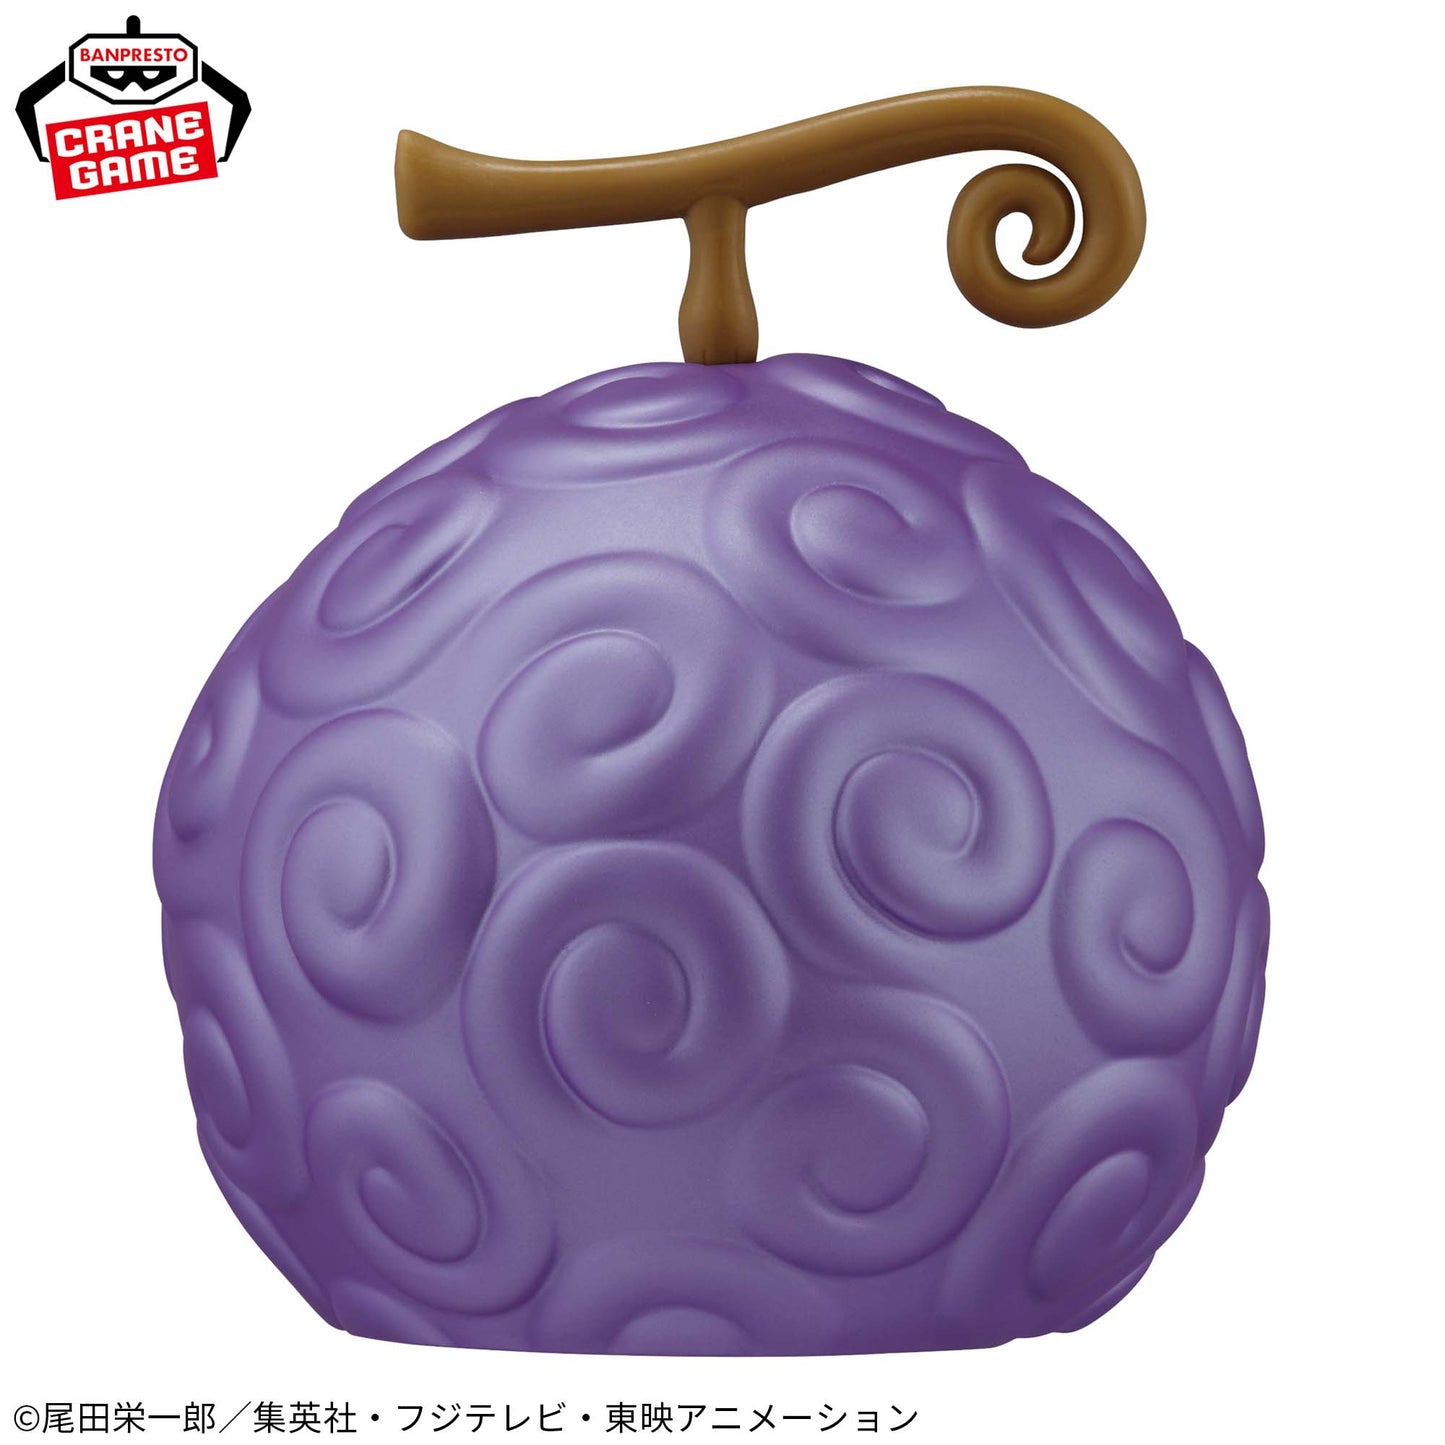 Figurine Lampe Fruit du Demon Gomu Gomu No Mi Ver.2 One Piece